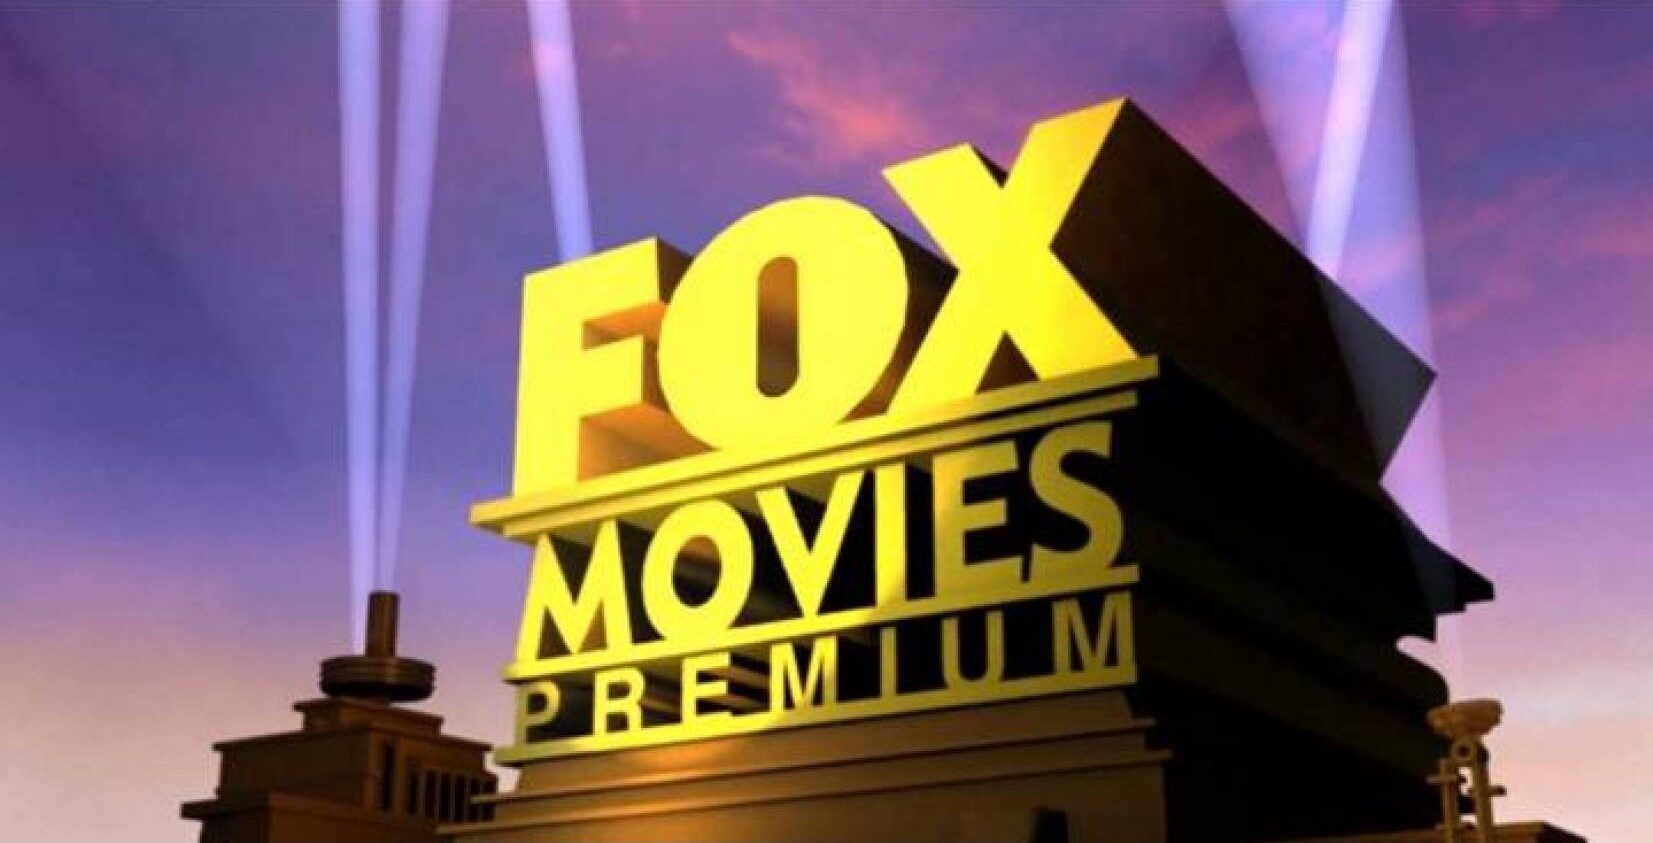 تردد قناة fox movies